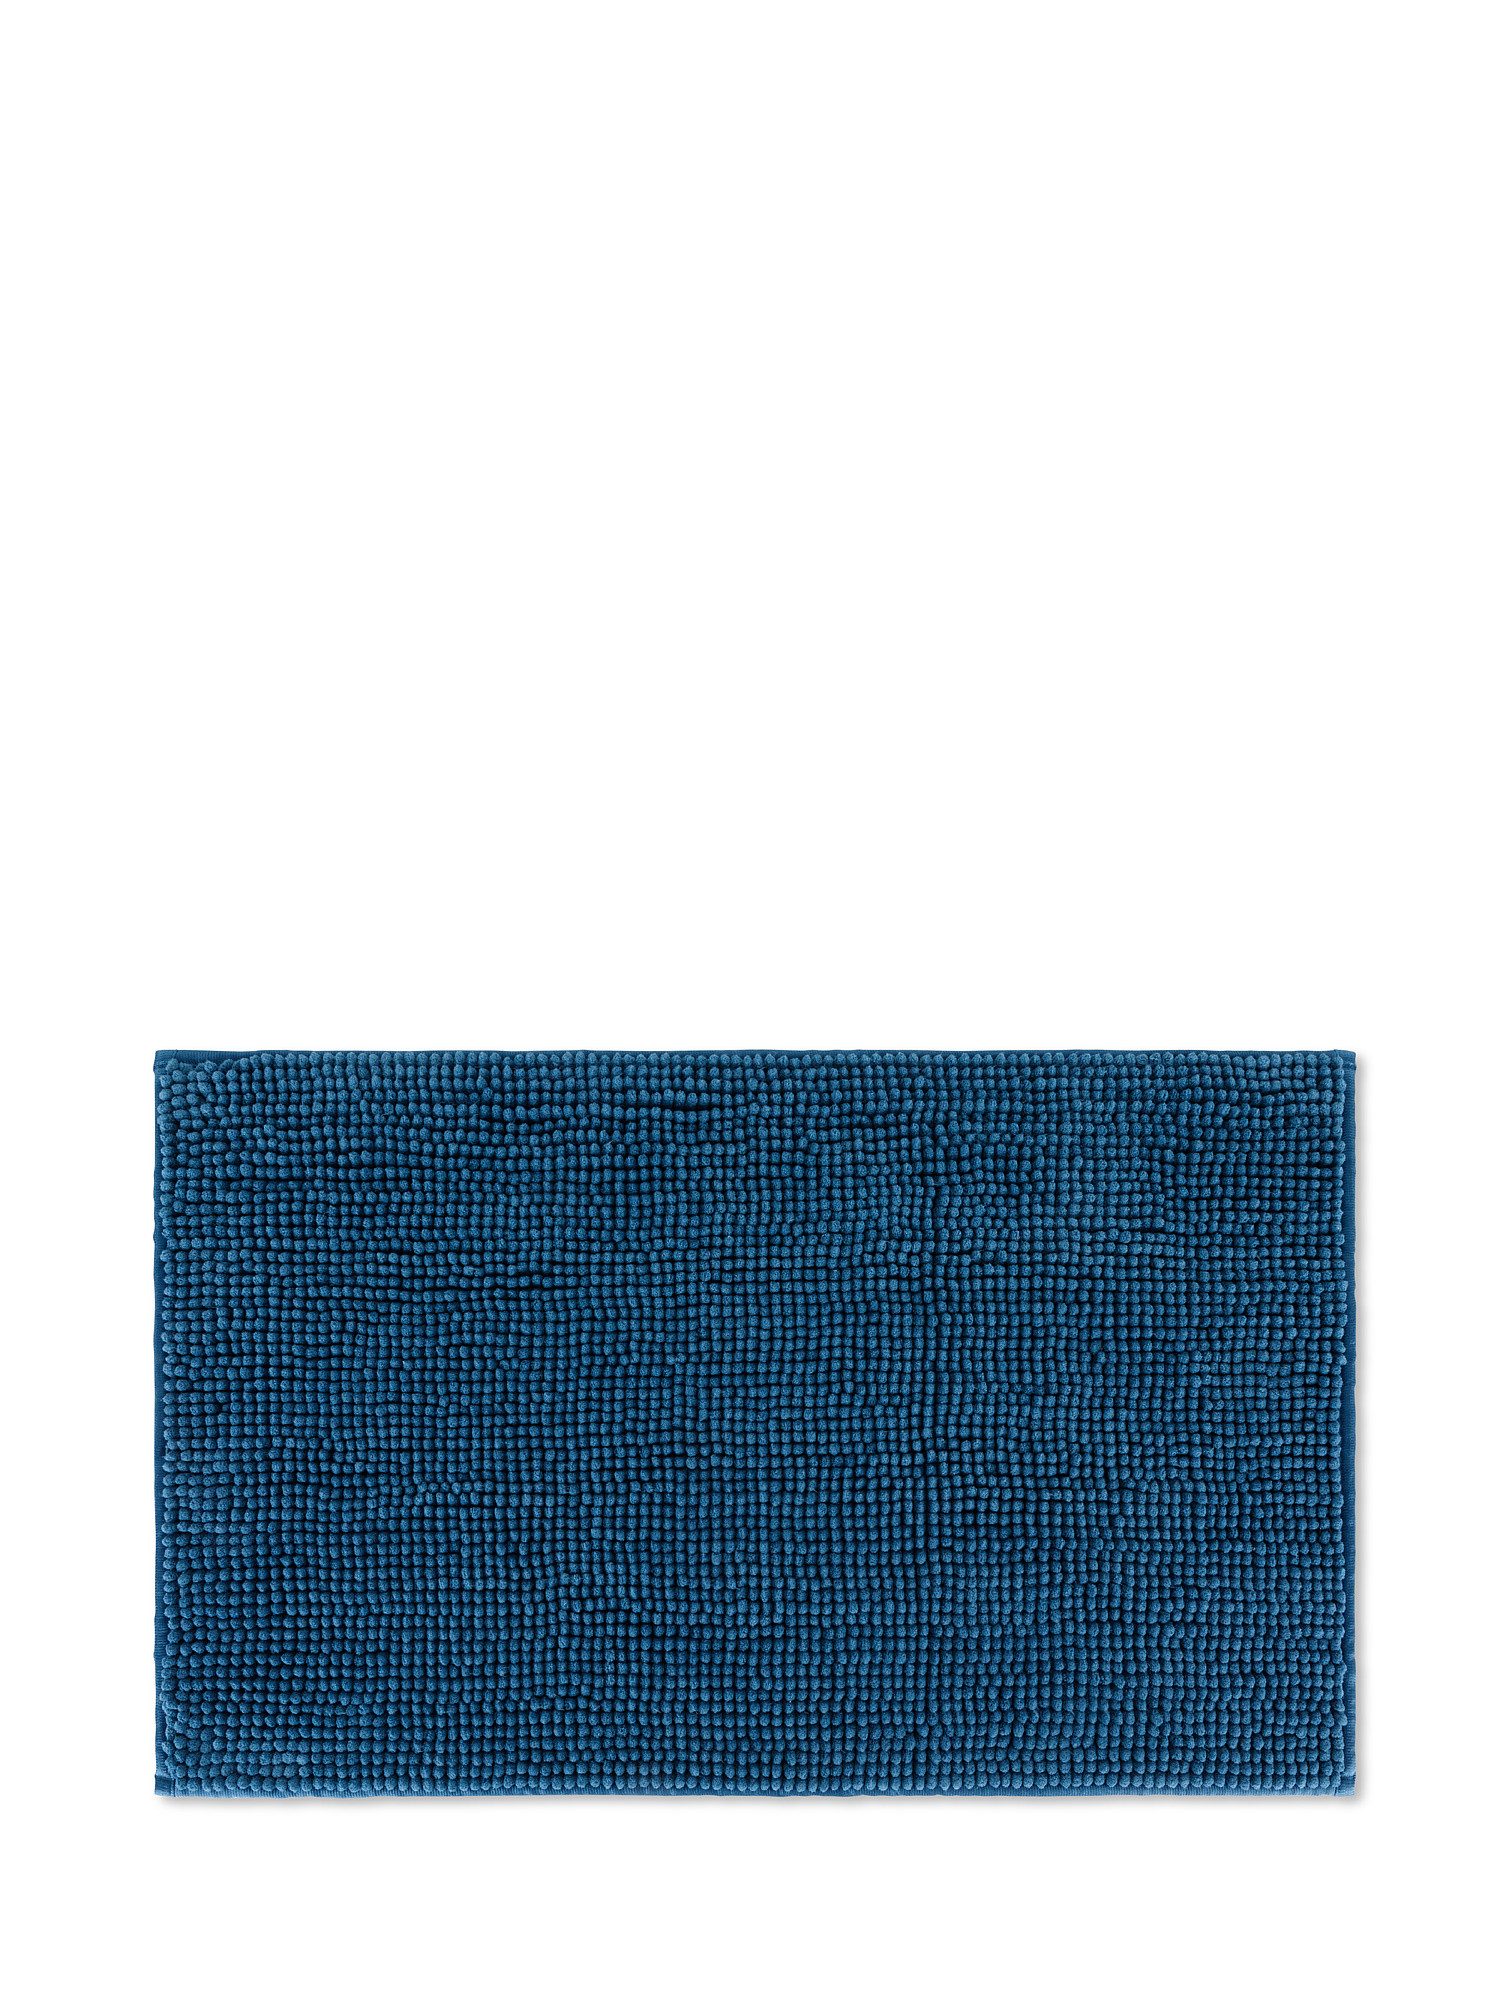 Shaggy style bathroom rug, Blue, large image number 0